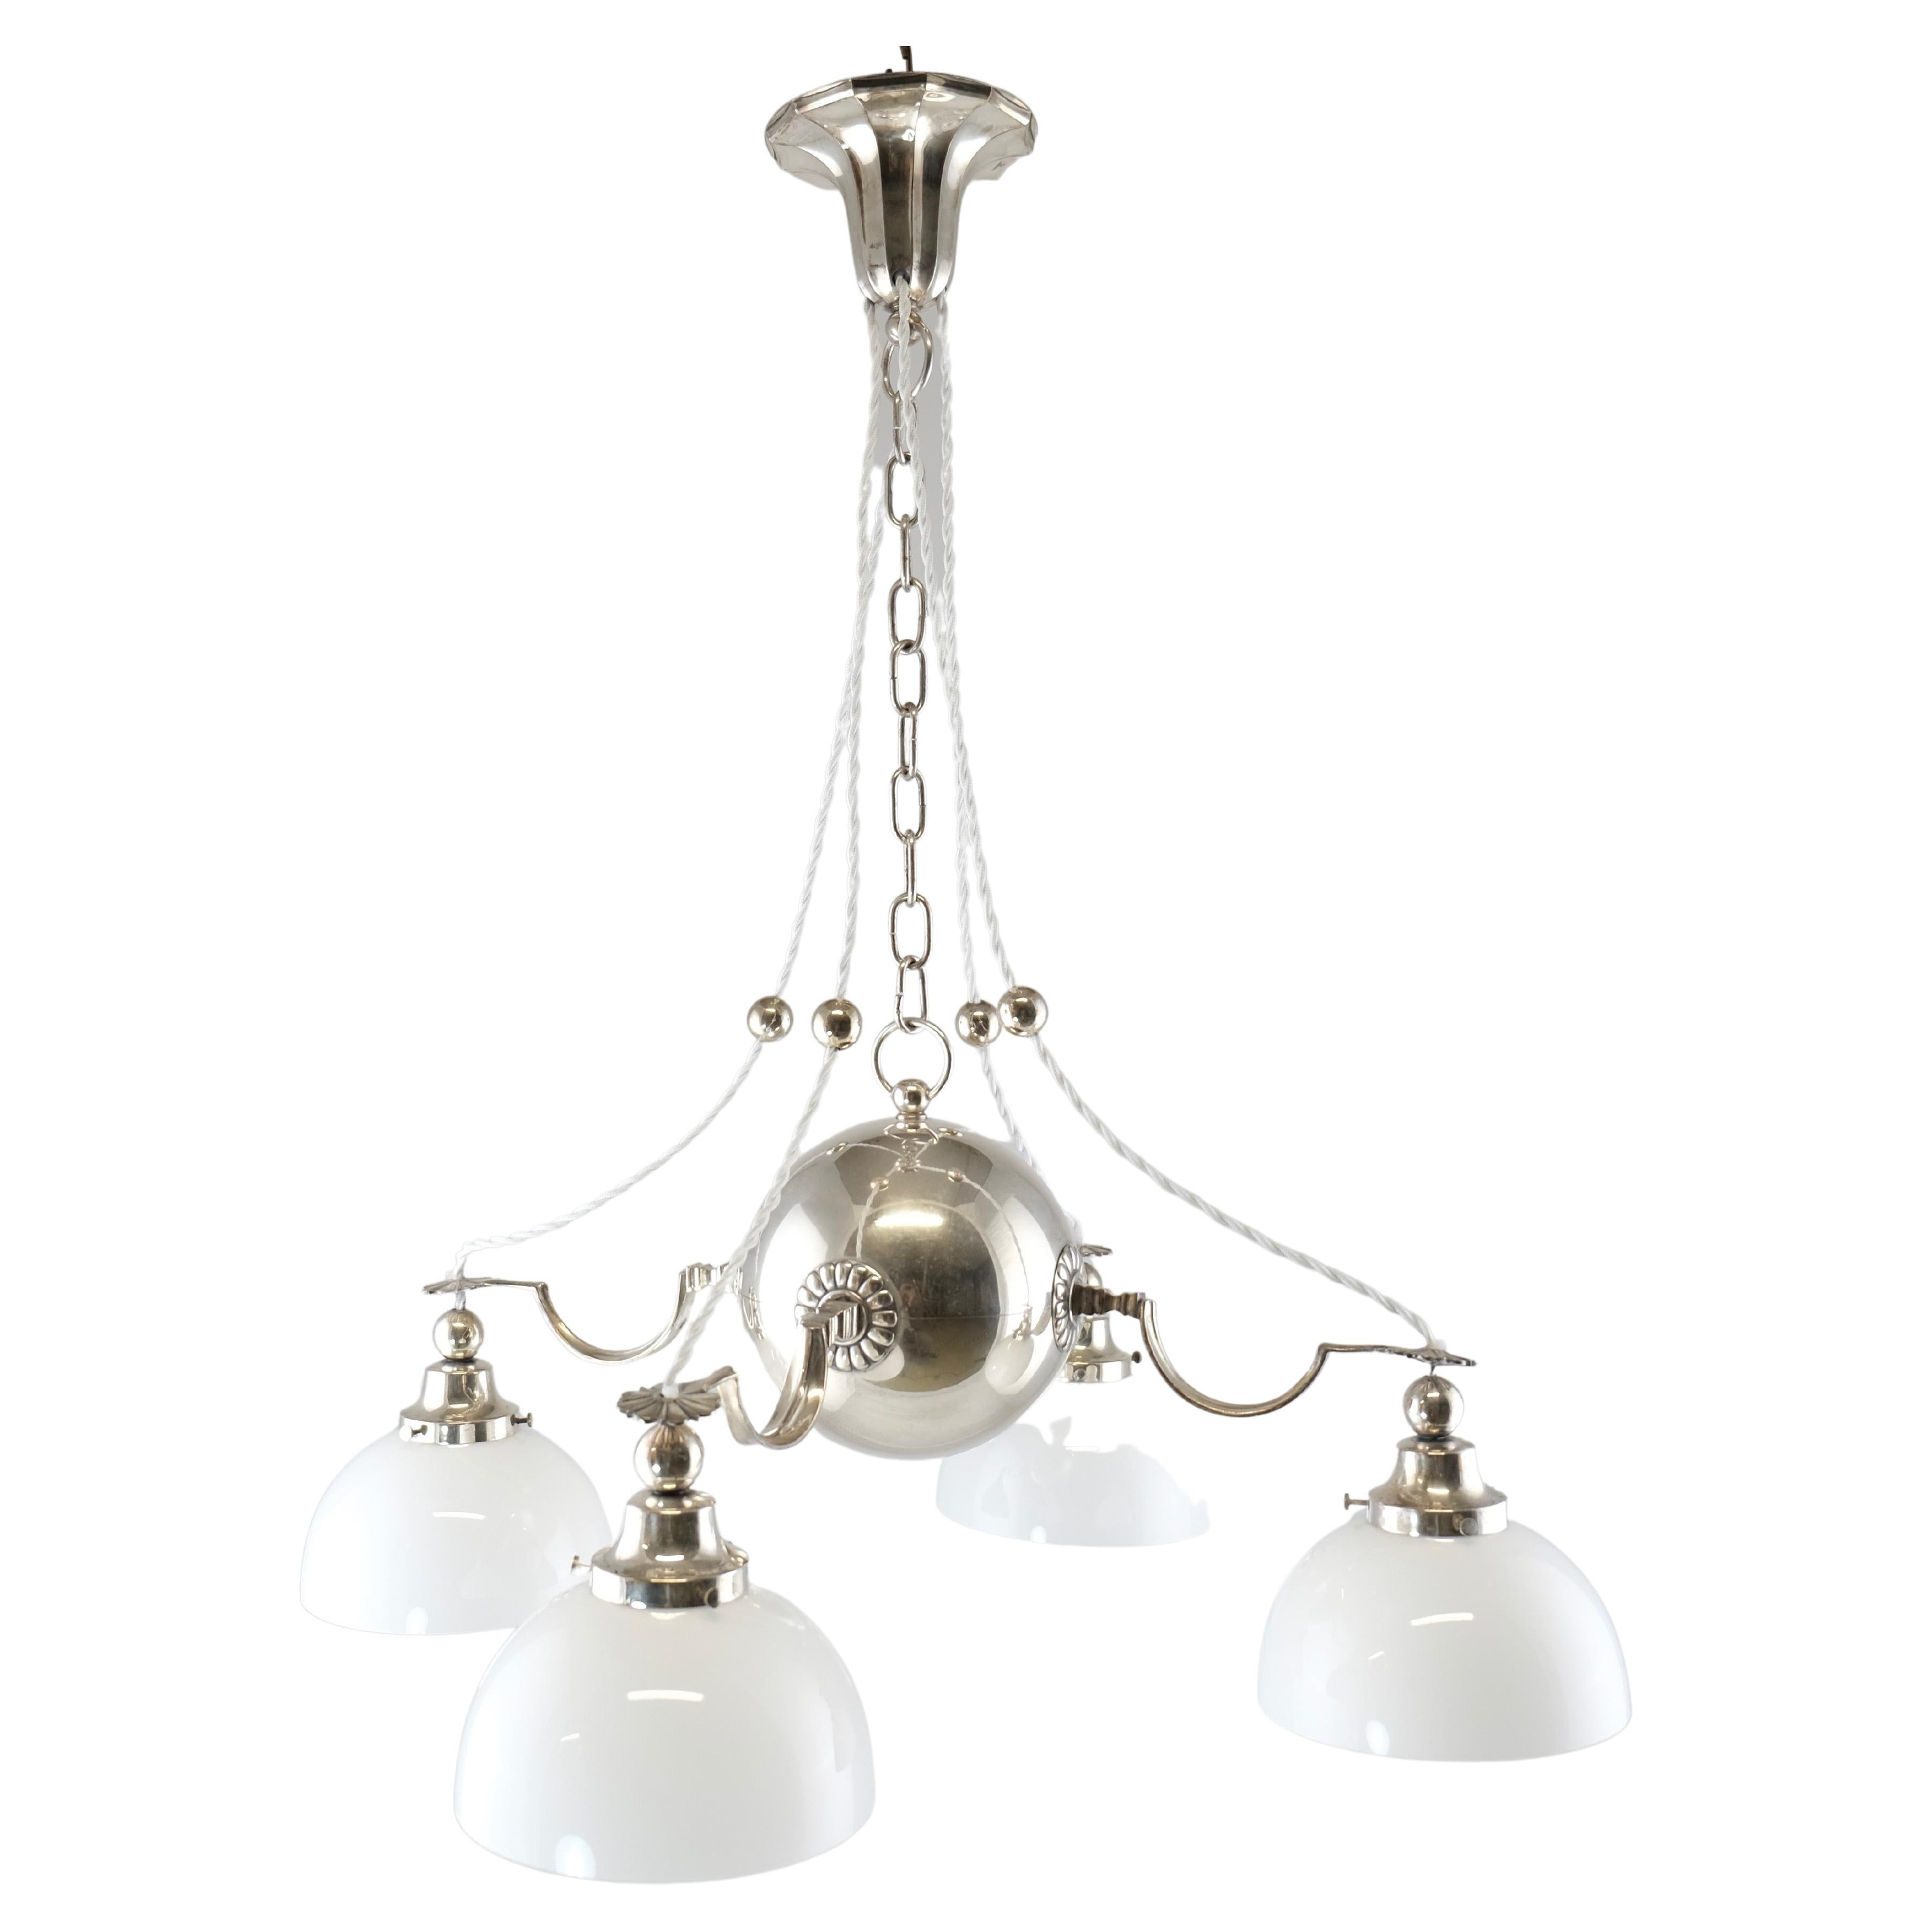 Swedish Silvered 4-Light Art Deco Lamp Made Around 1930